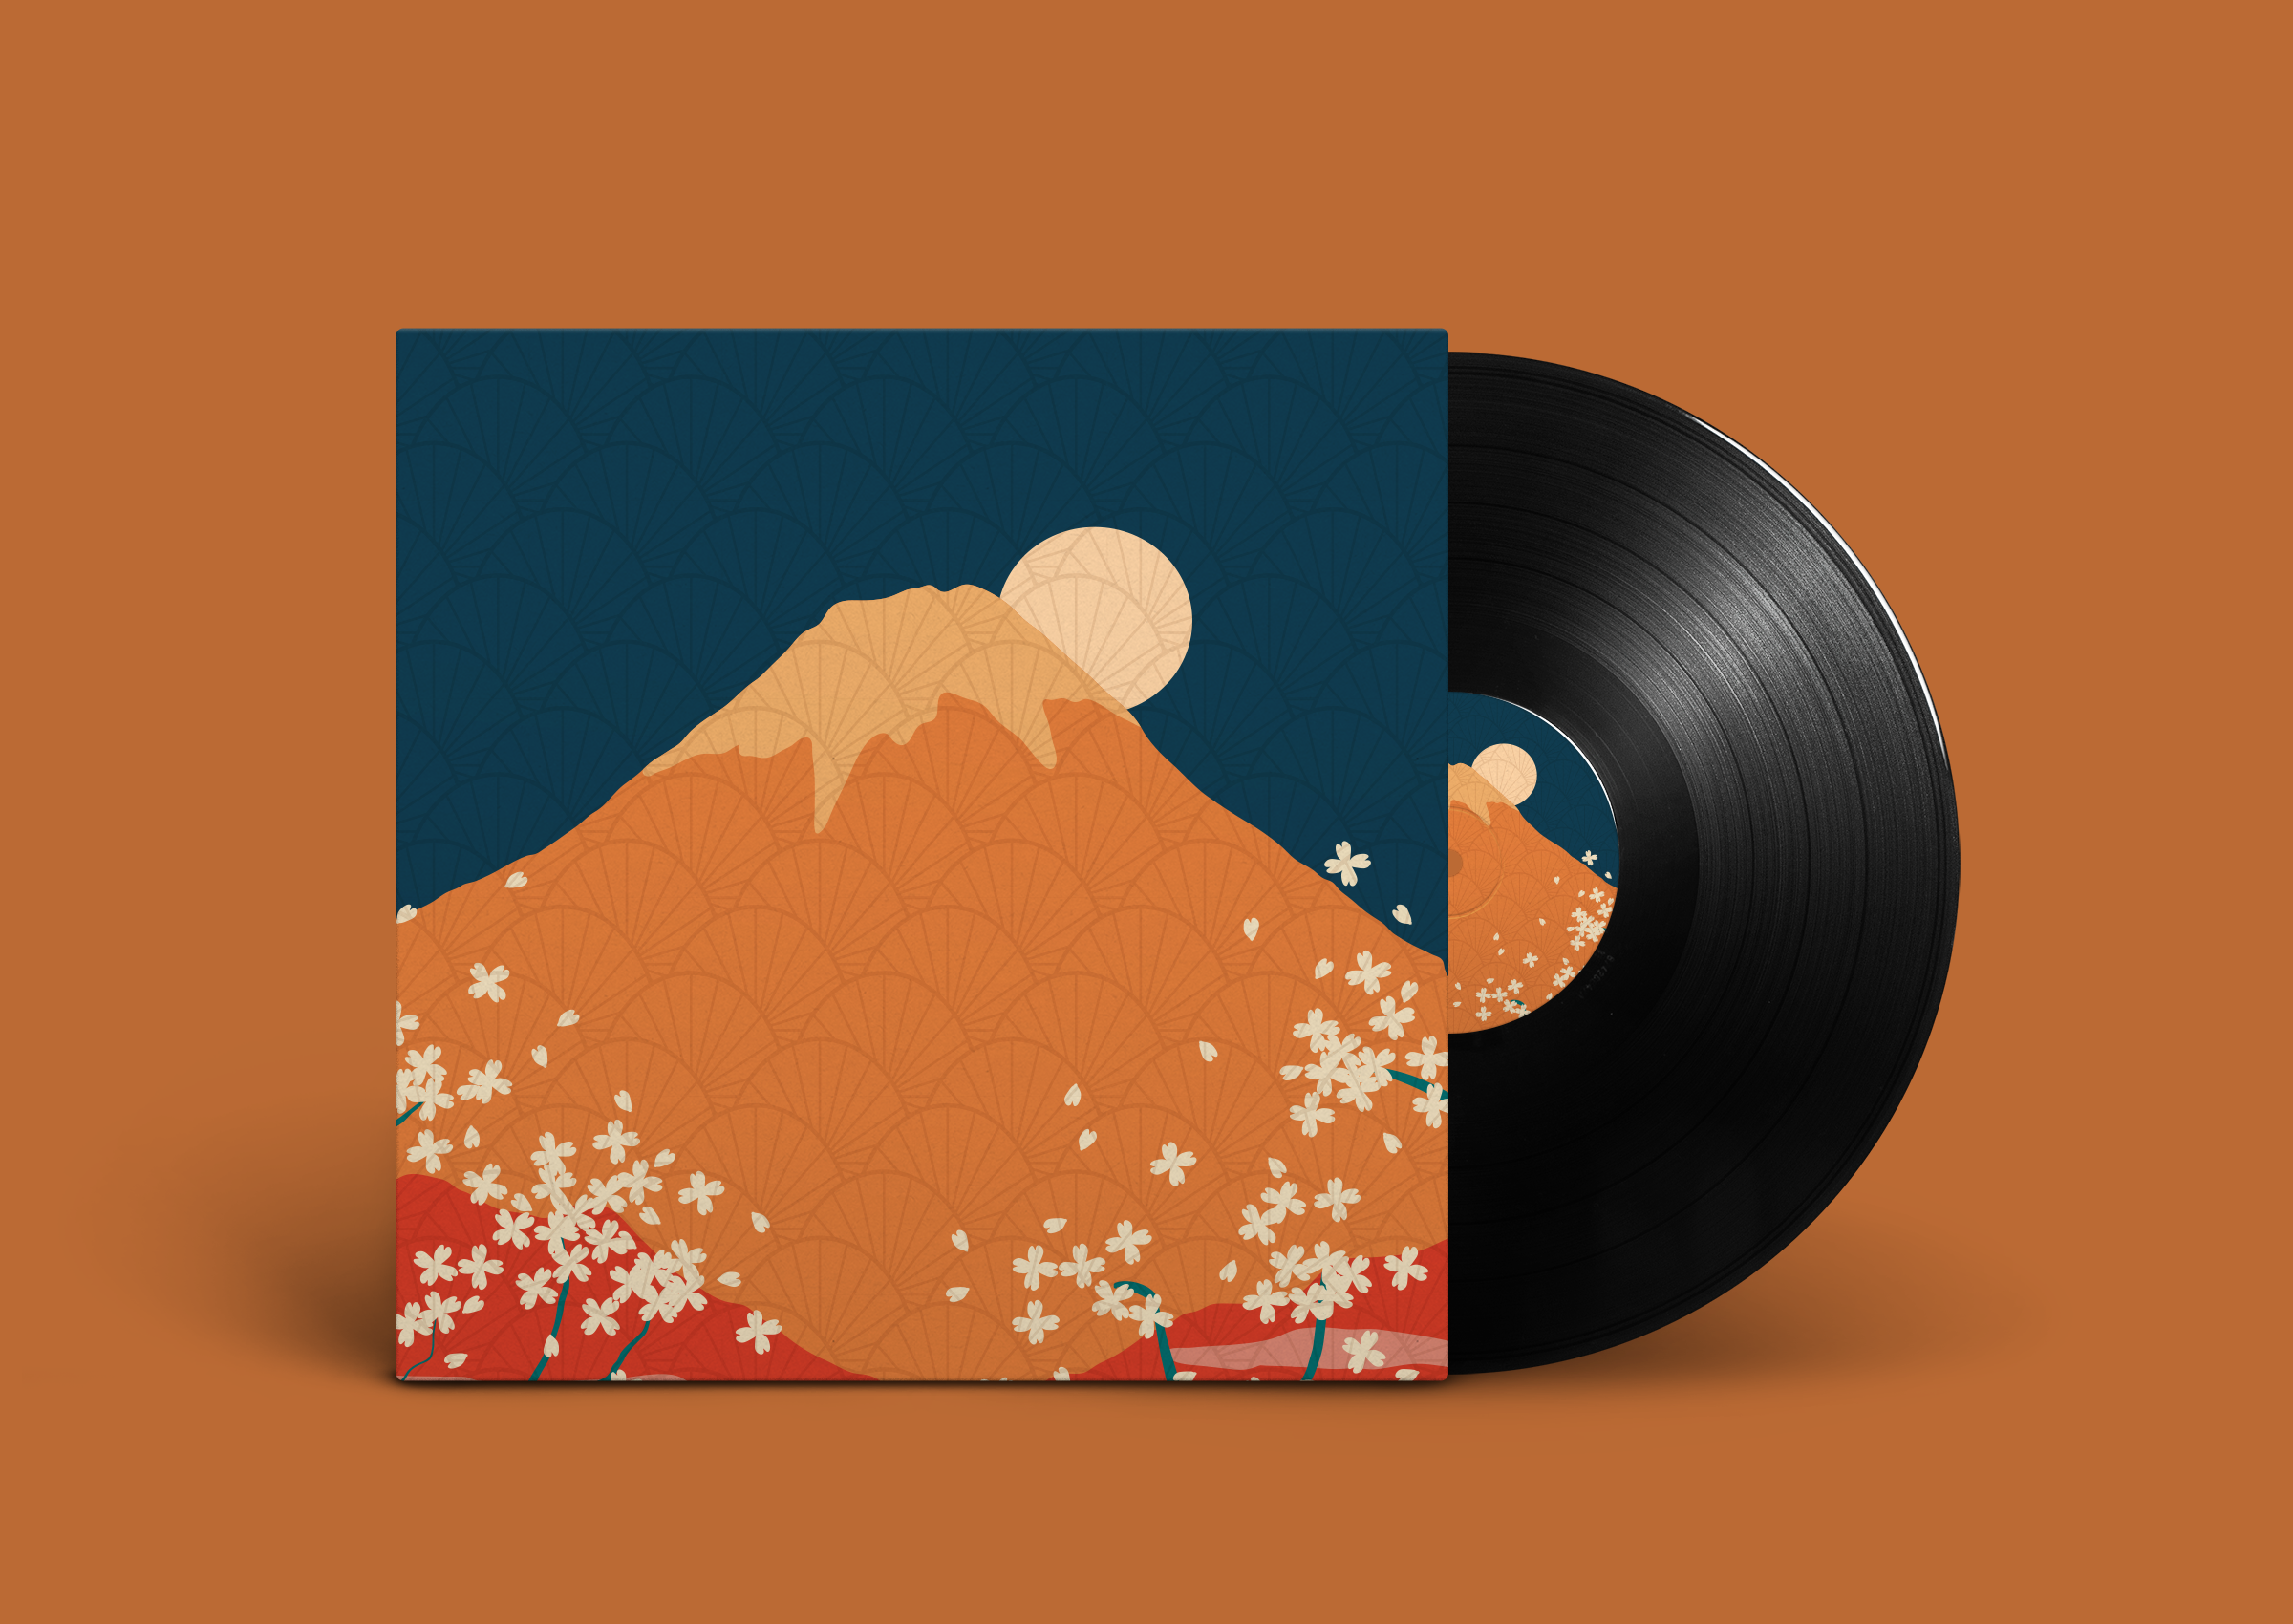 Cherry Blossoms at Dusk Vinyl Cover